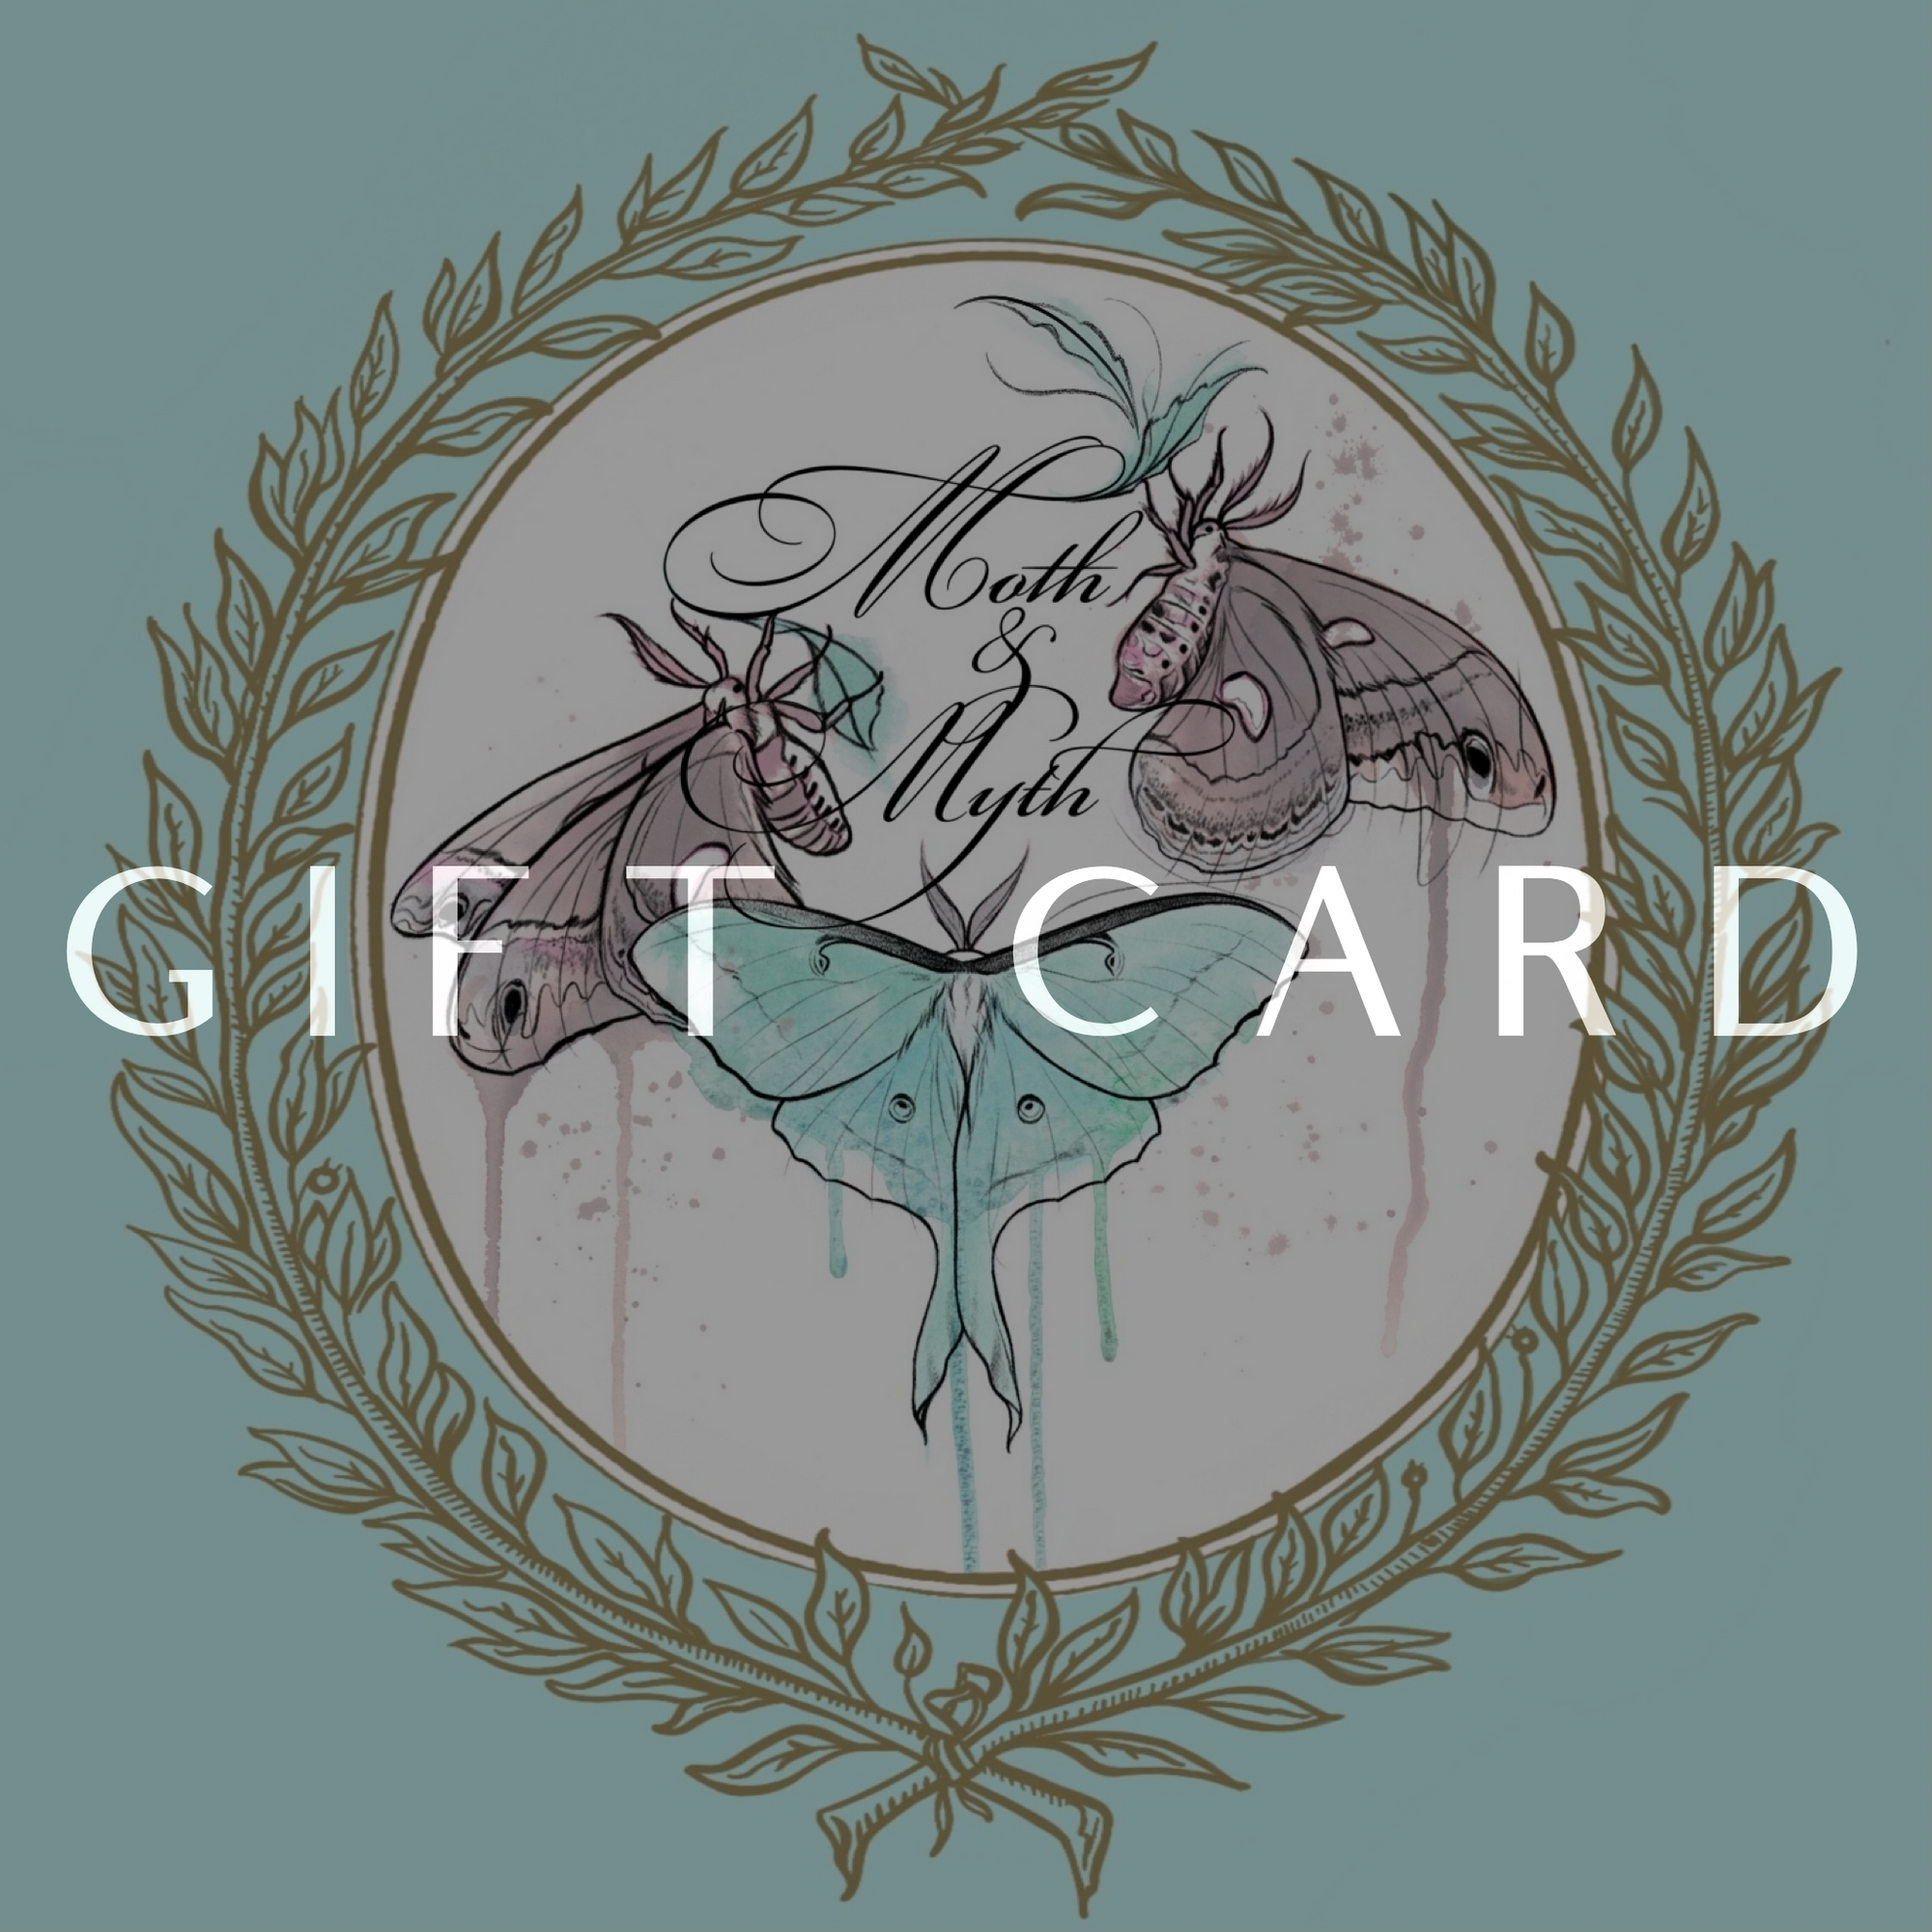 Moth & Myth Virtual Gift Card